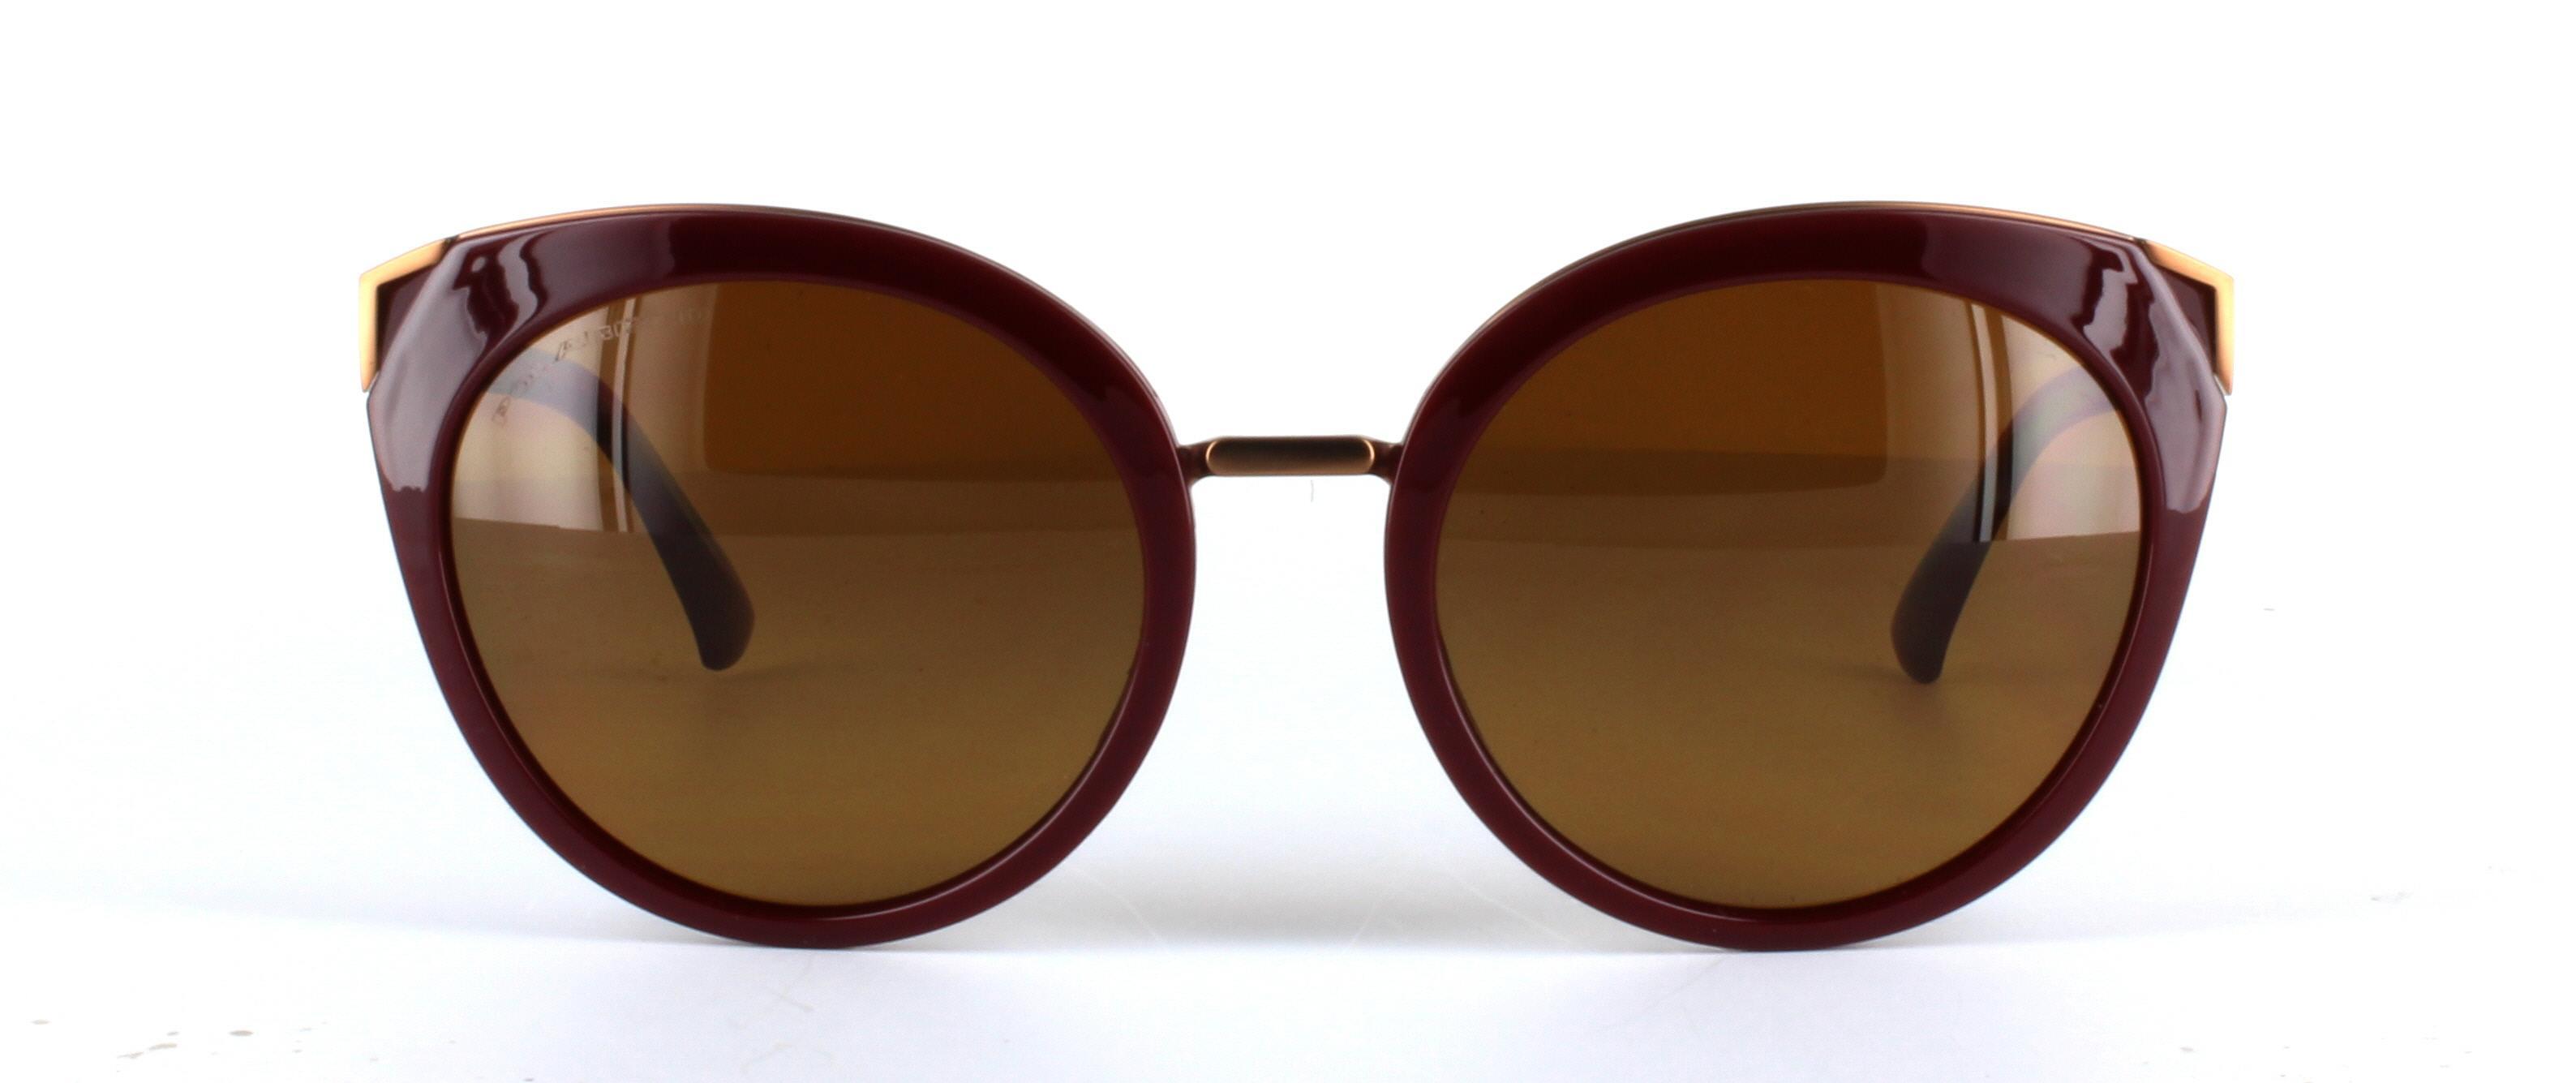 Oakley (O9434) Burgundy Full Rim Plastic Prescription Sunglasses - Image View 5